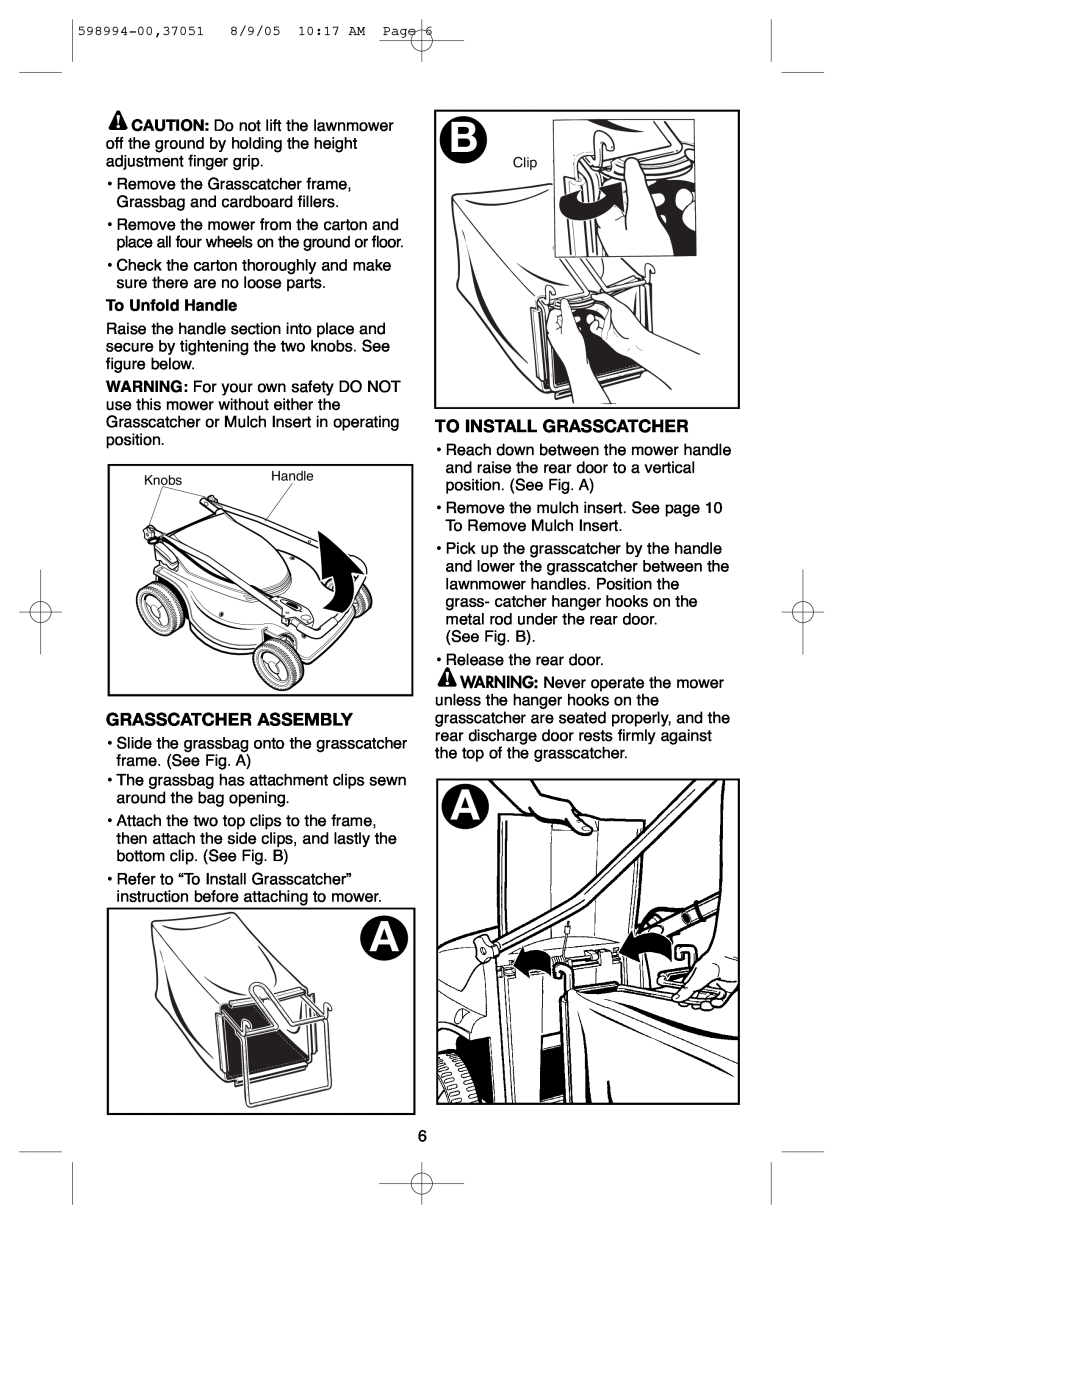 DeWalt 900.37051 instruction manual Grasscatcher Assembly, To Install Grasscatcher, To Unfold Handle 